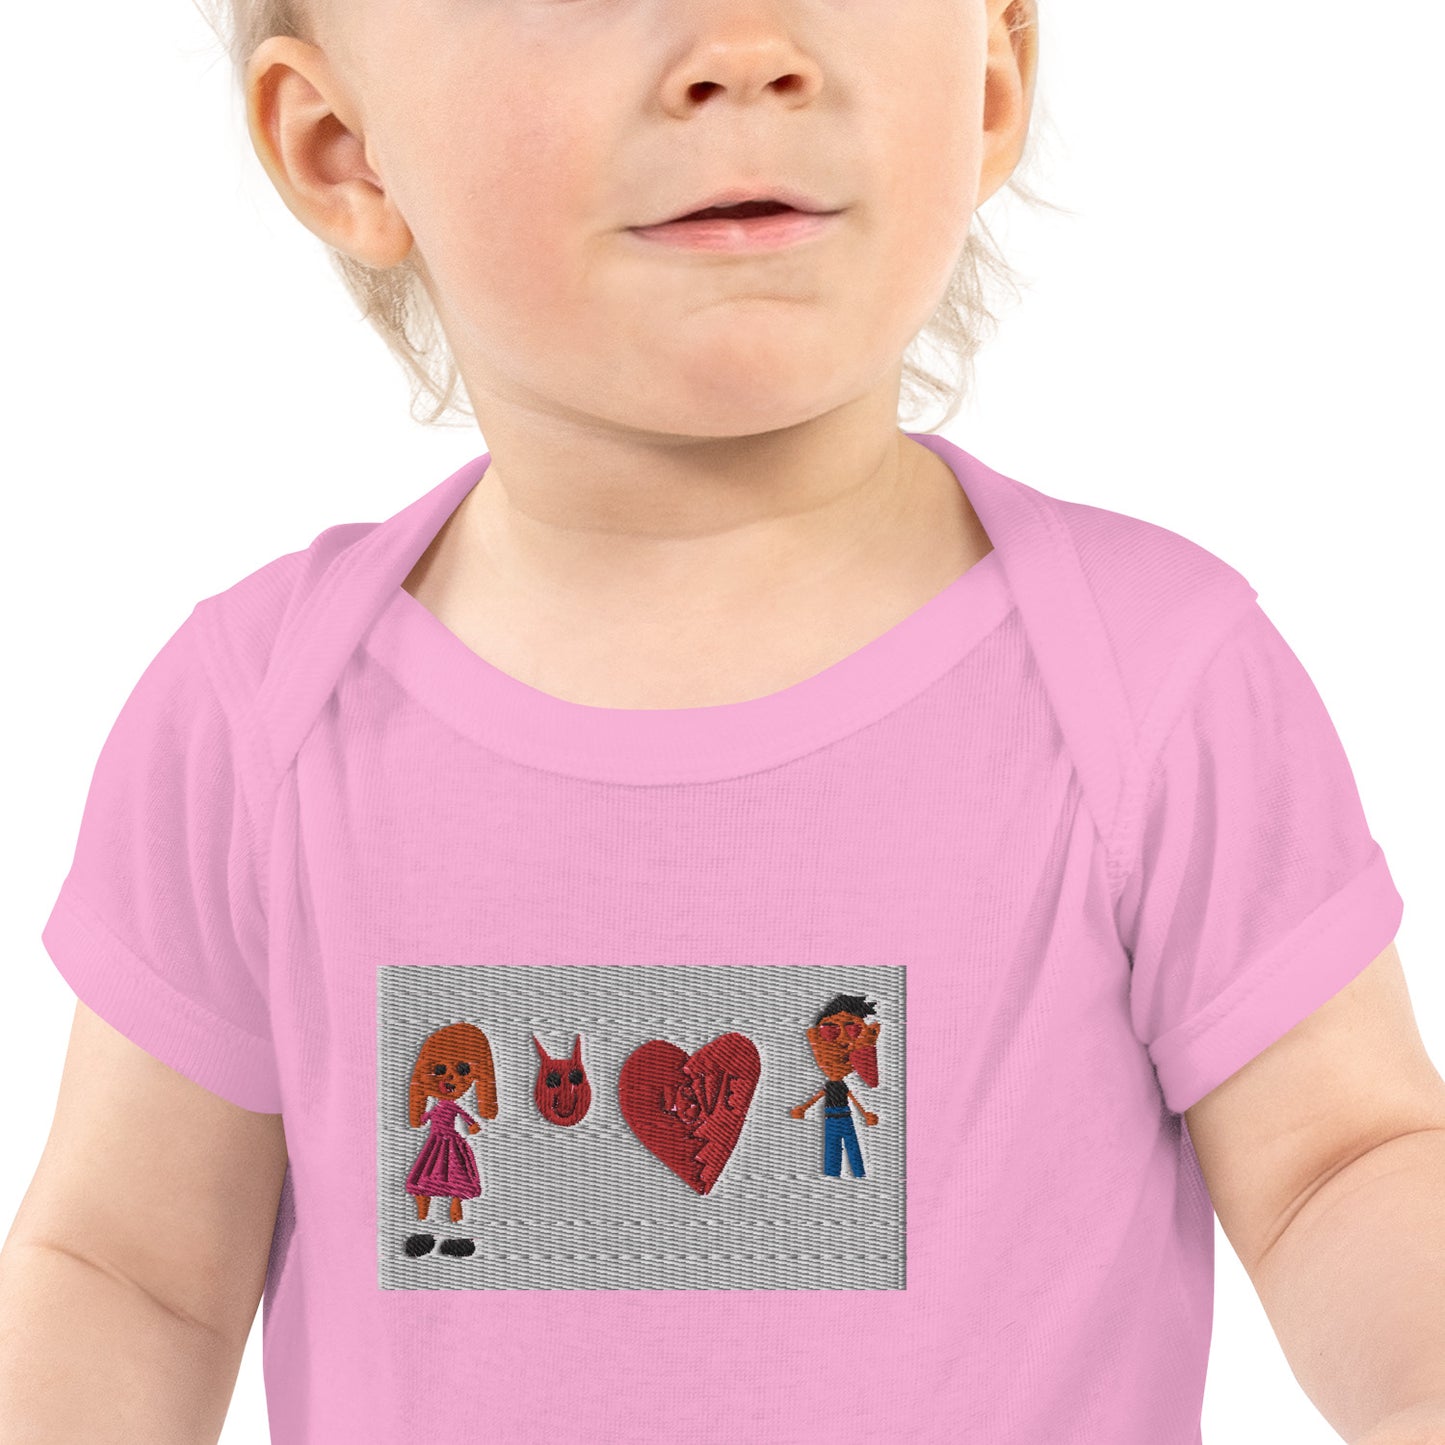 Infant Bodysuit with Olivia design